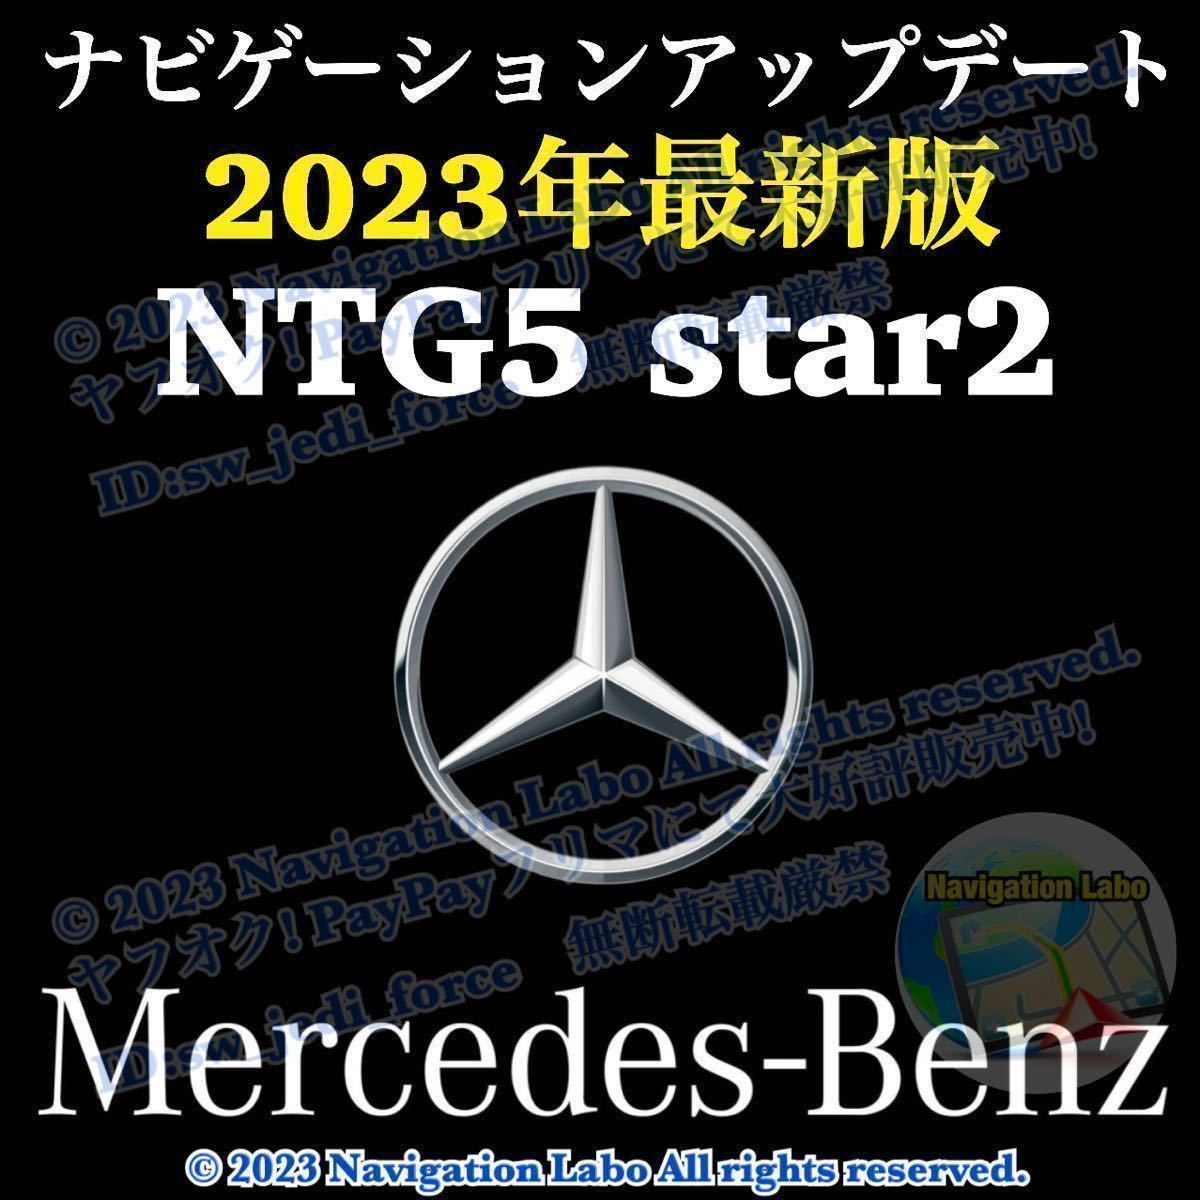 【NTG5 star2_V11】メルセデスベンツ 純正ナビ更新地図ソフト 最新2023年発売 クラスC S GLC V AMGGT 前期型W205 W222 X253 C253 W447 C190_NTG5 star2(5.2/5s2) 搭載車両全車種対応